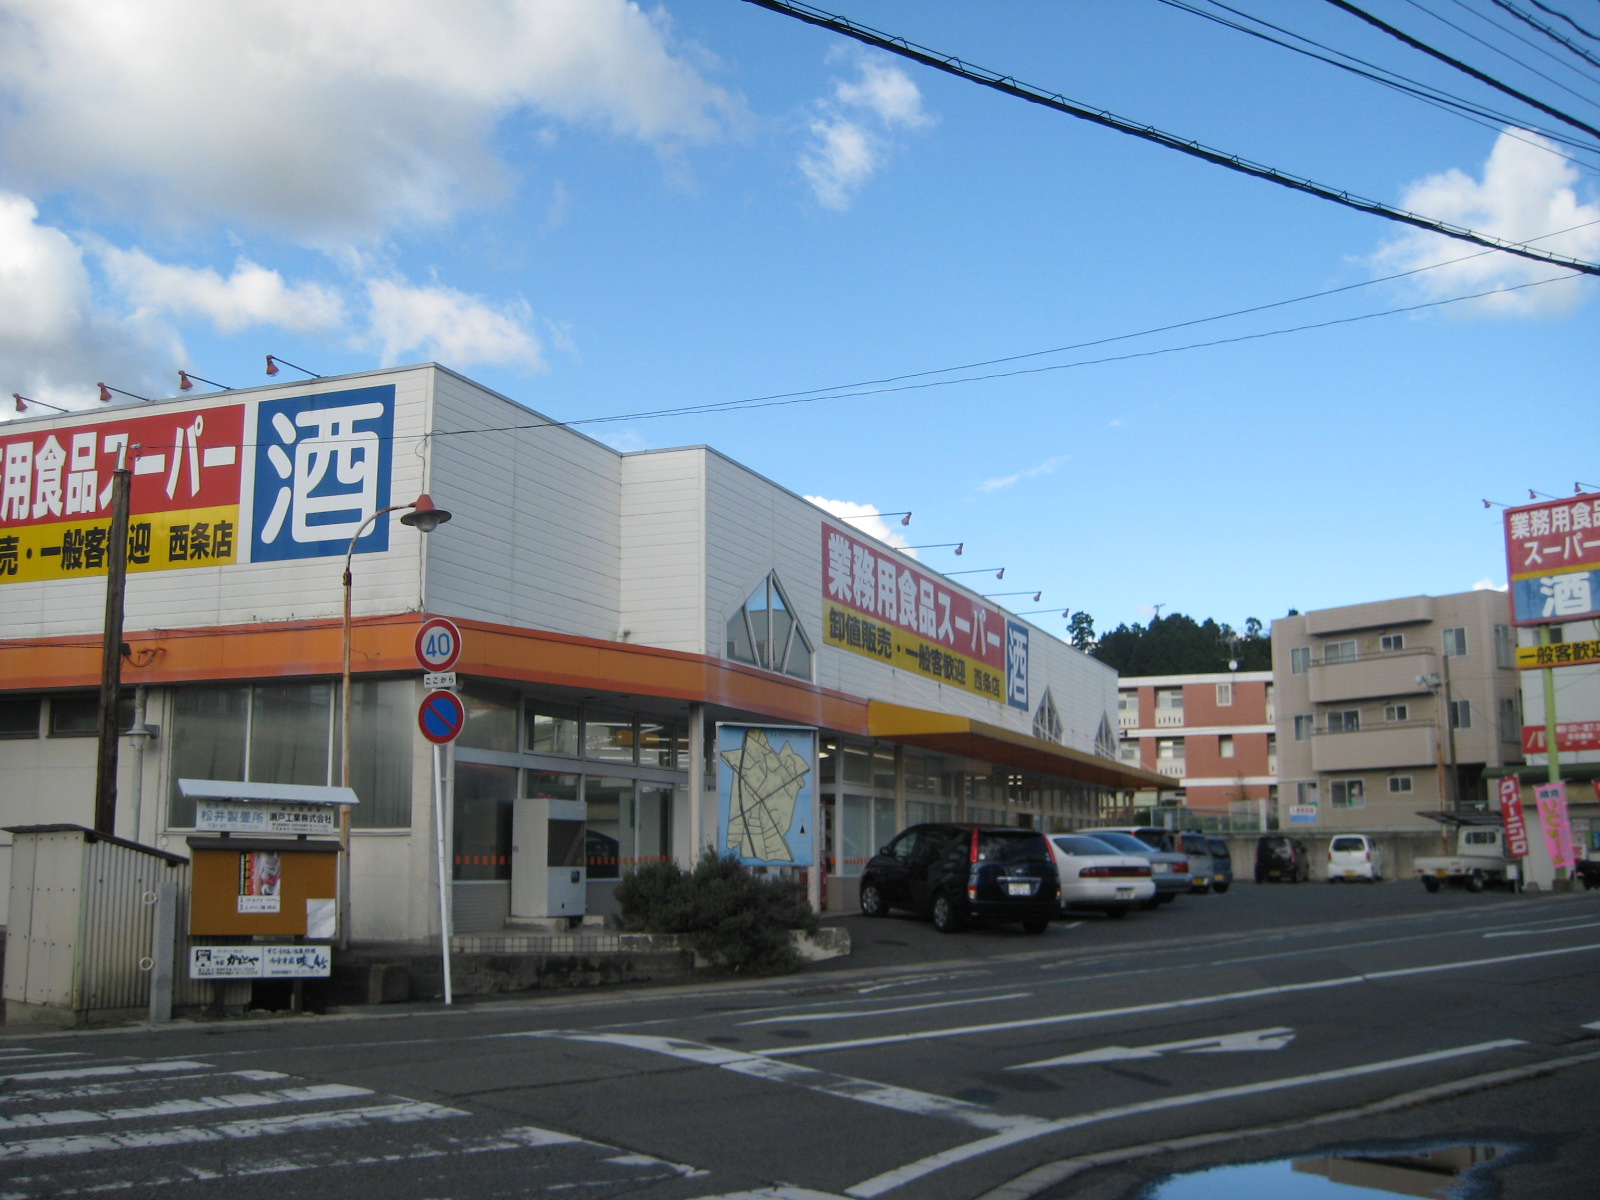 Supermarket. 983m up business for Super Saijo store (Super)